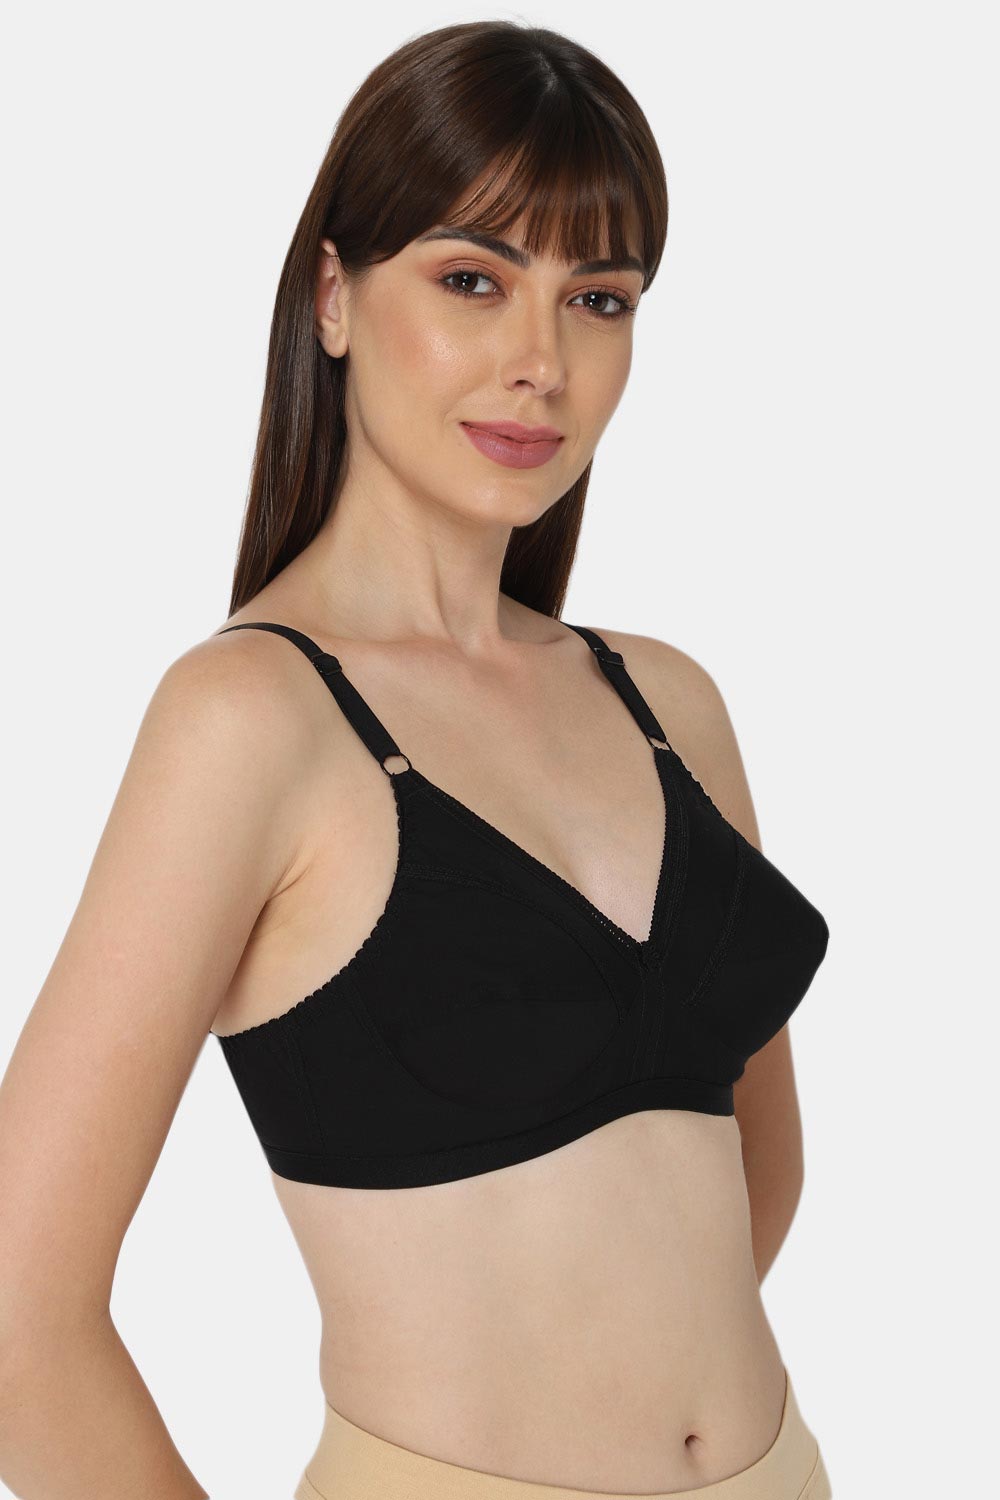 Buy full padded bra 28 size in India @ Limeroad